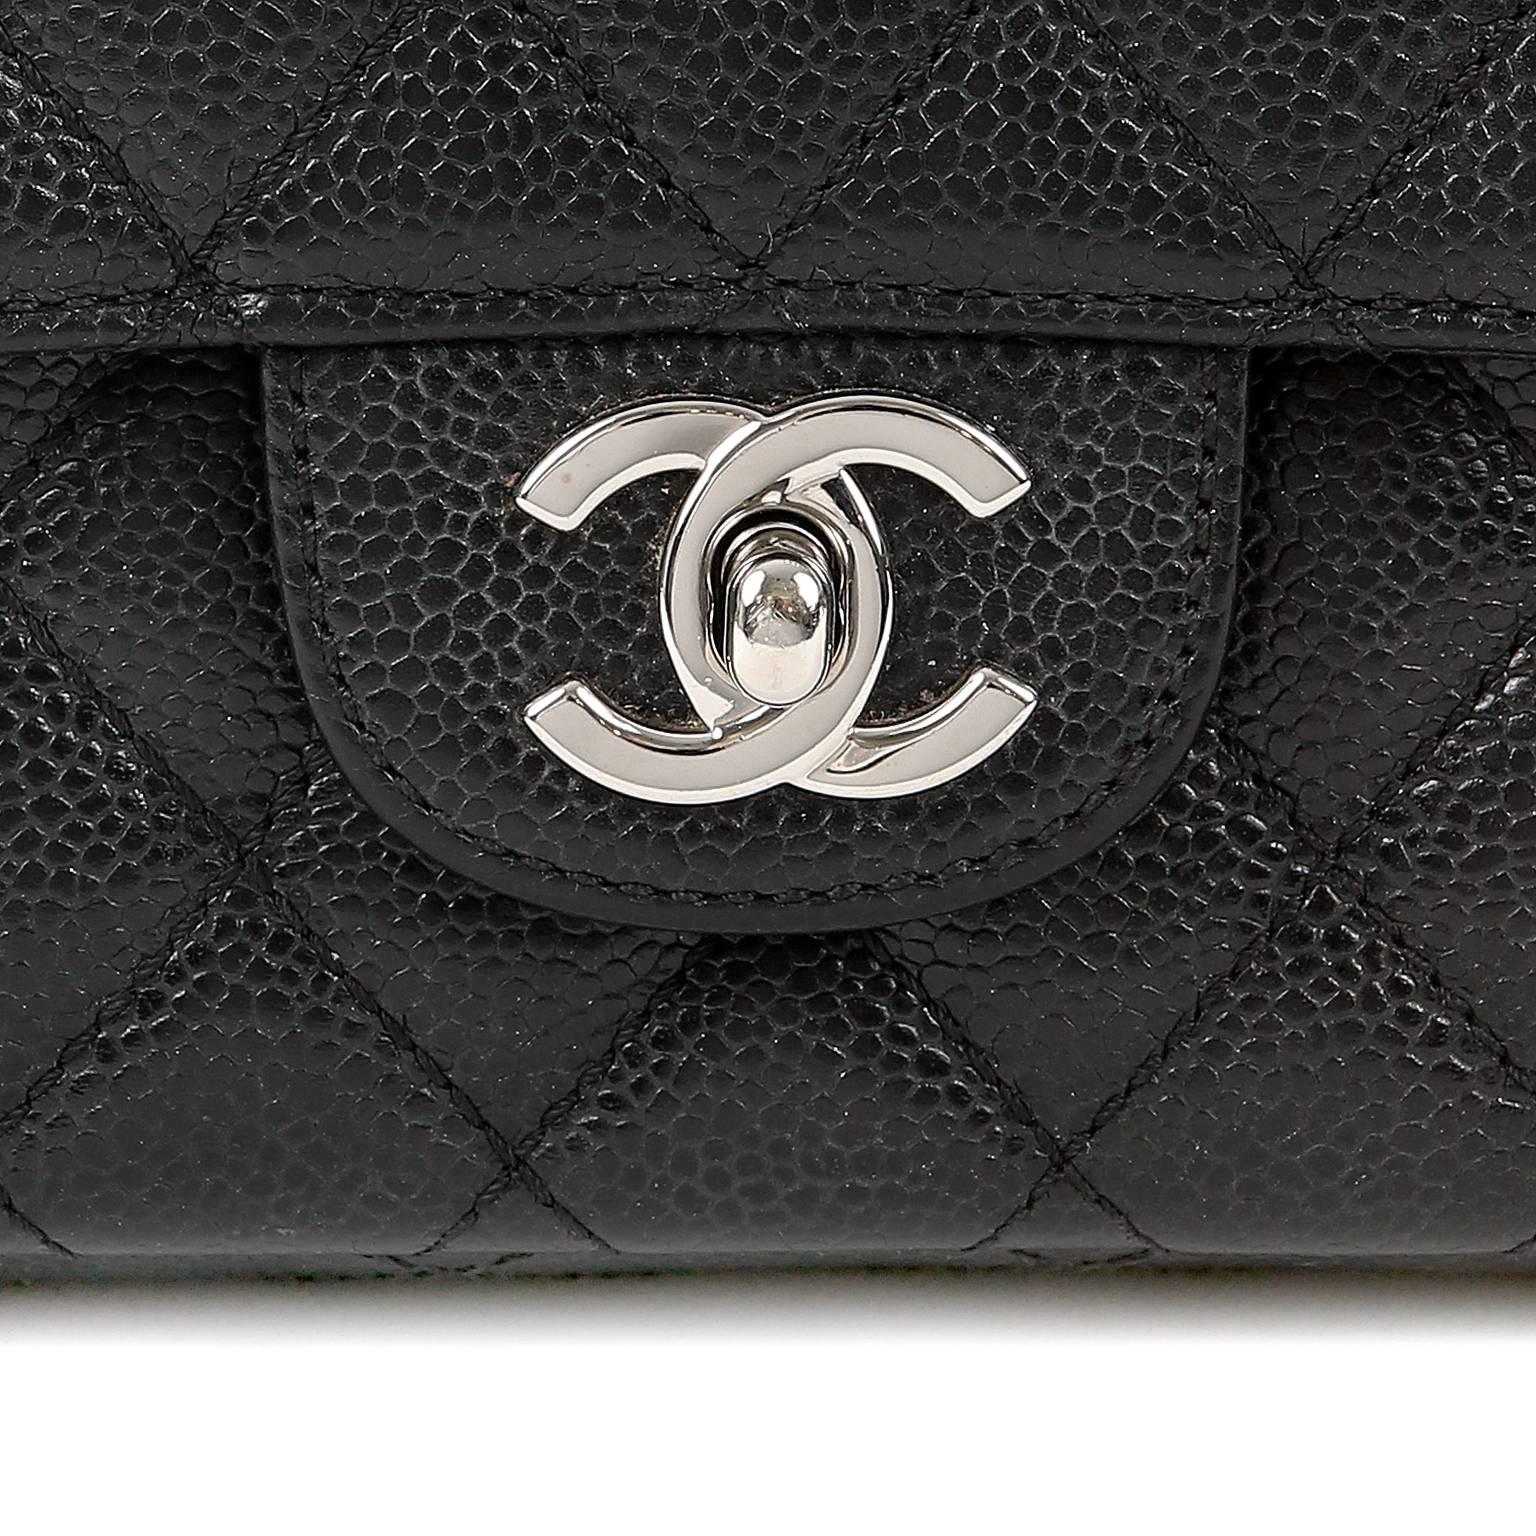 Chanel Black Caviar Leather East West Flap Bag 1